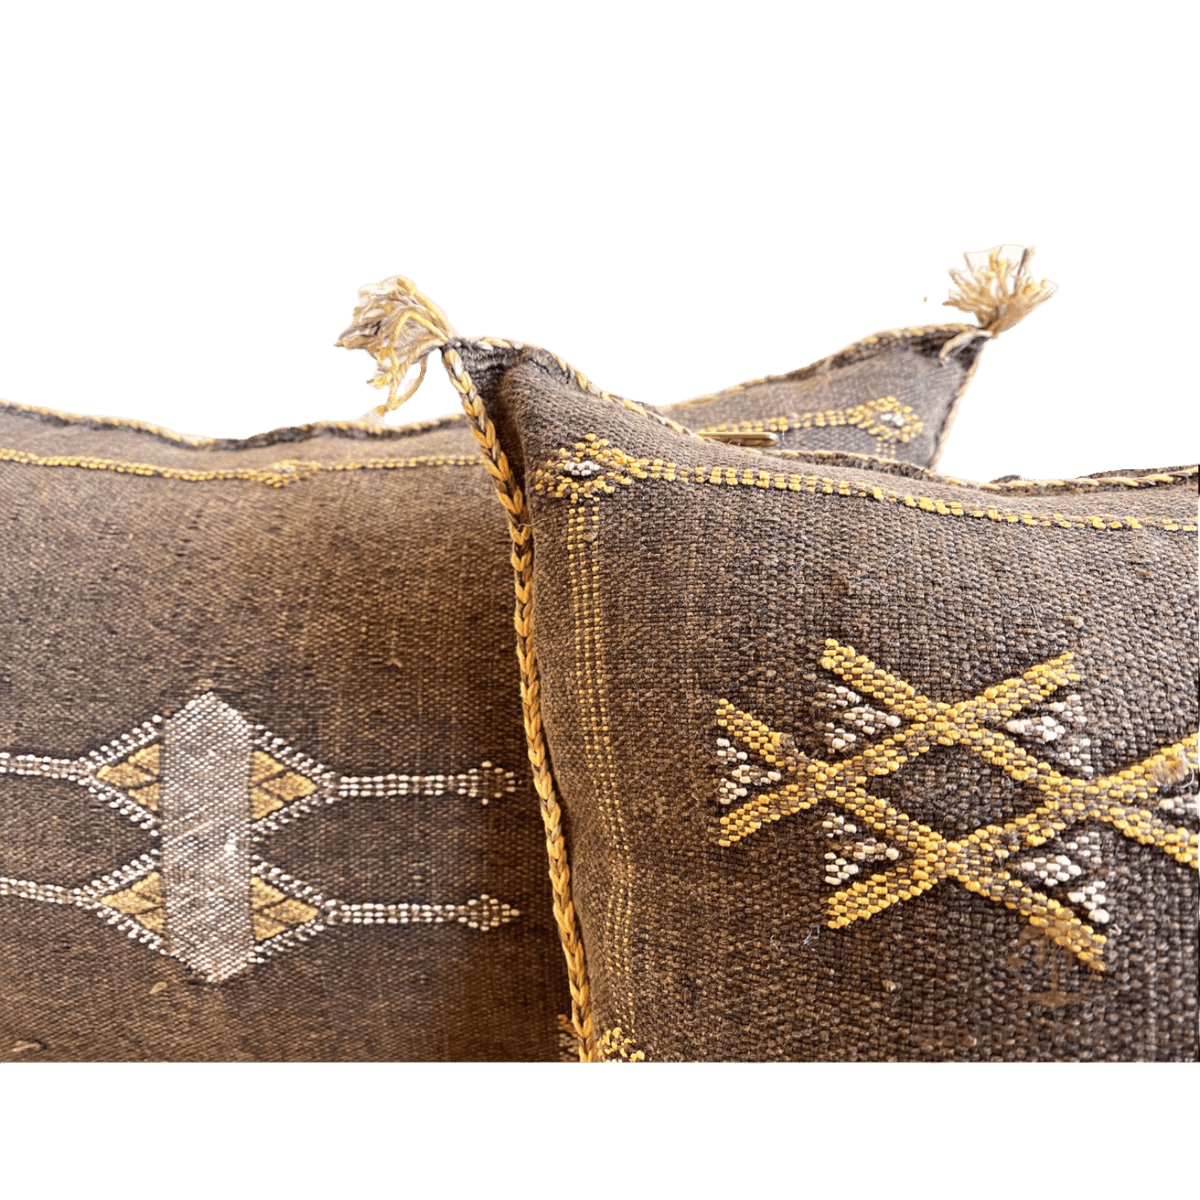 Moroccan Lumbar Pillow Cover - Cultheir 